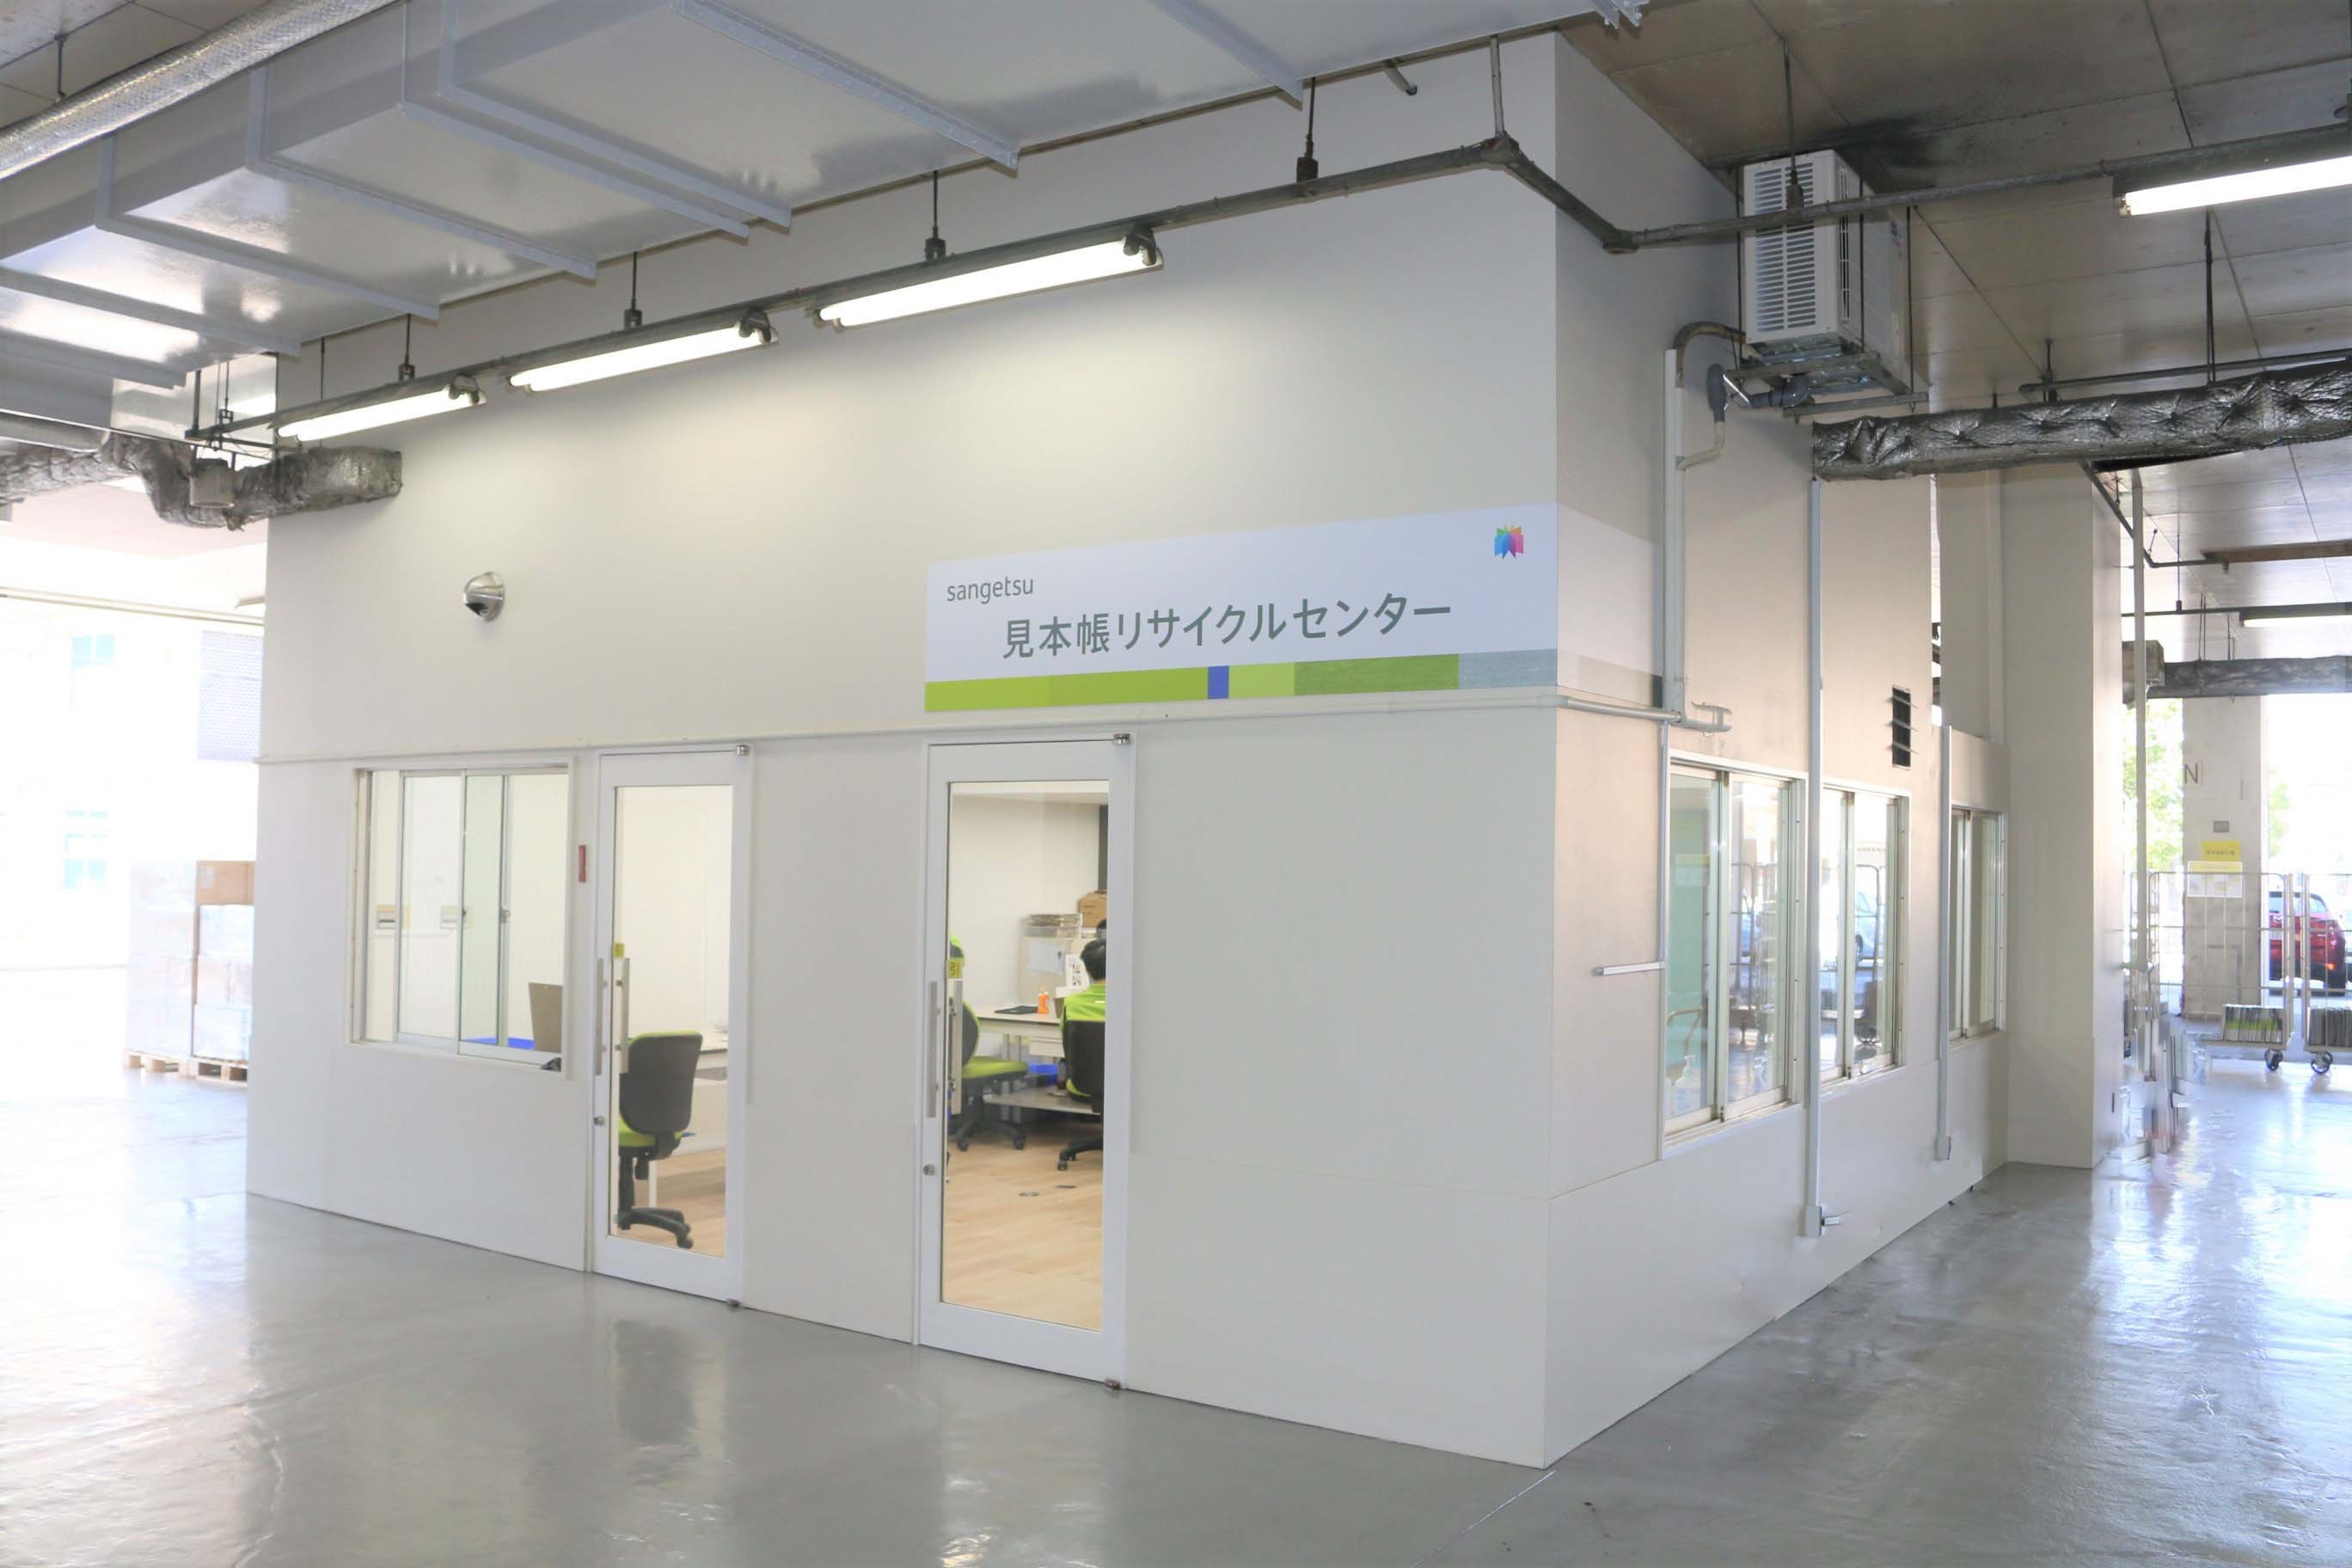 Sangetsu 見本帳リサイクルセンター を開設 サンゲツ